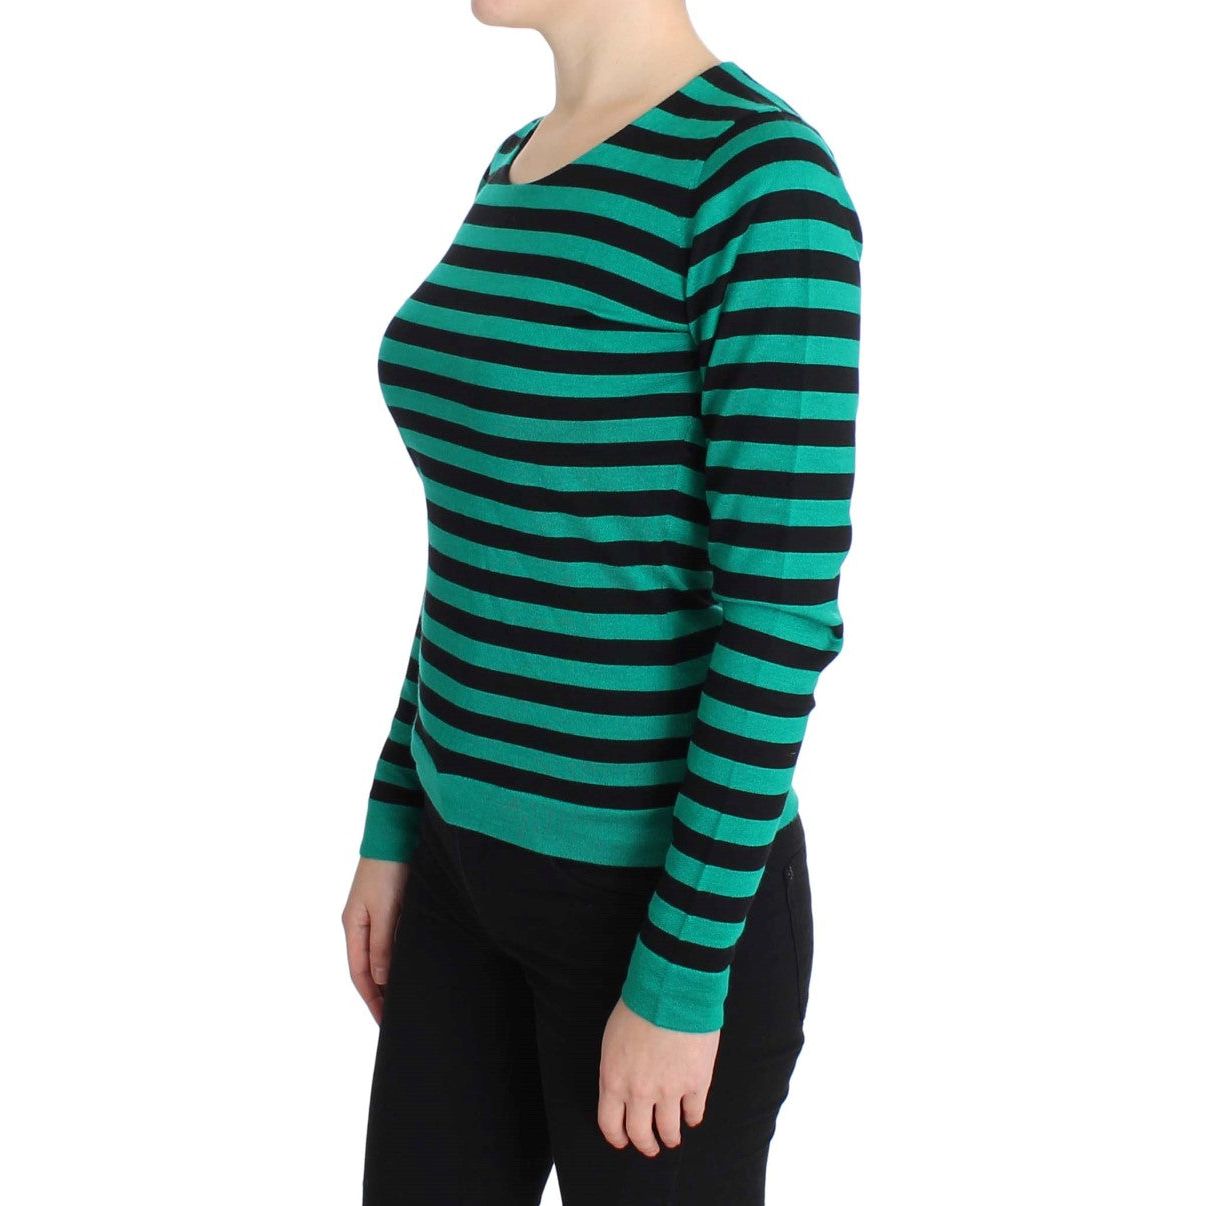 Dolce & Gabbana Elegant Striped Cashmere Silk Sweater green-black-silk-cashmere-sweater 178844-green-black-silk-cashmere-sweater-1.jpg